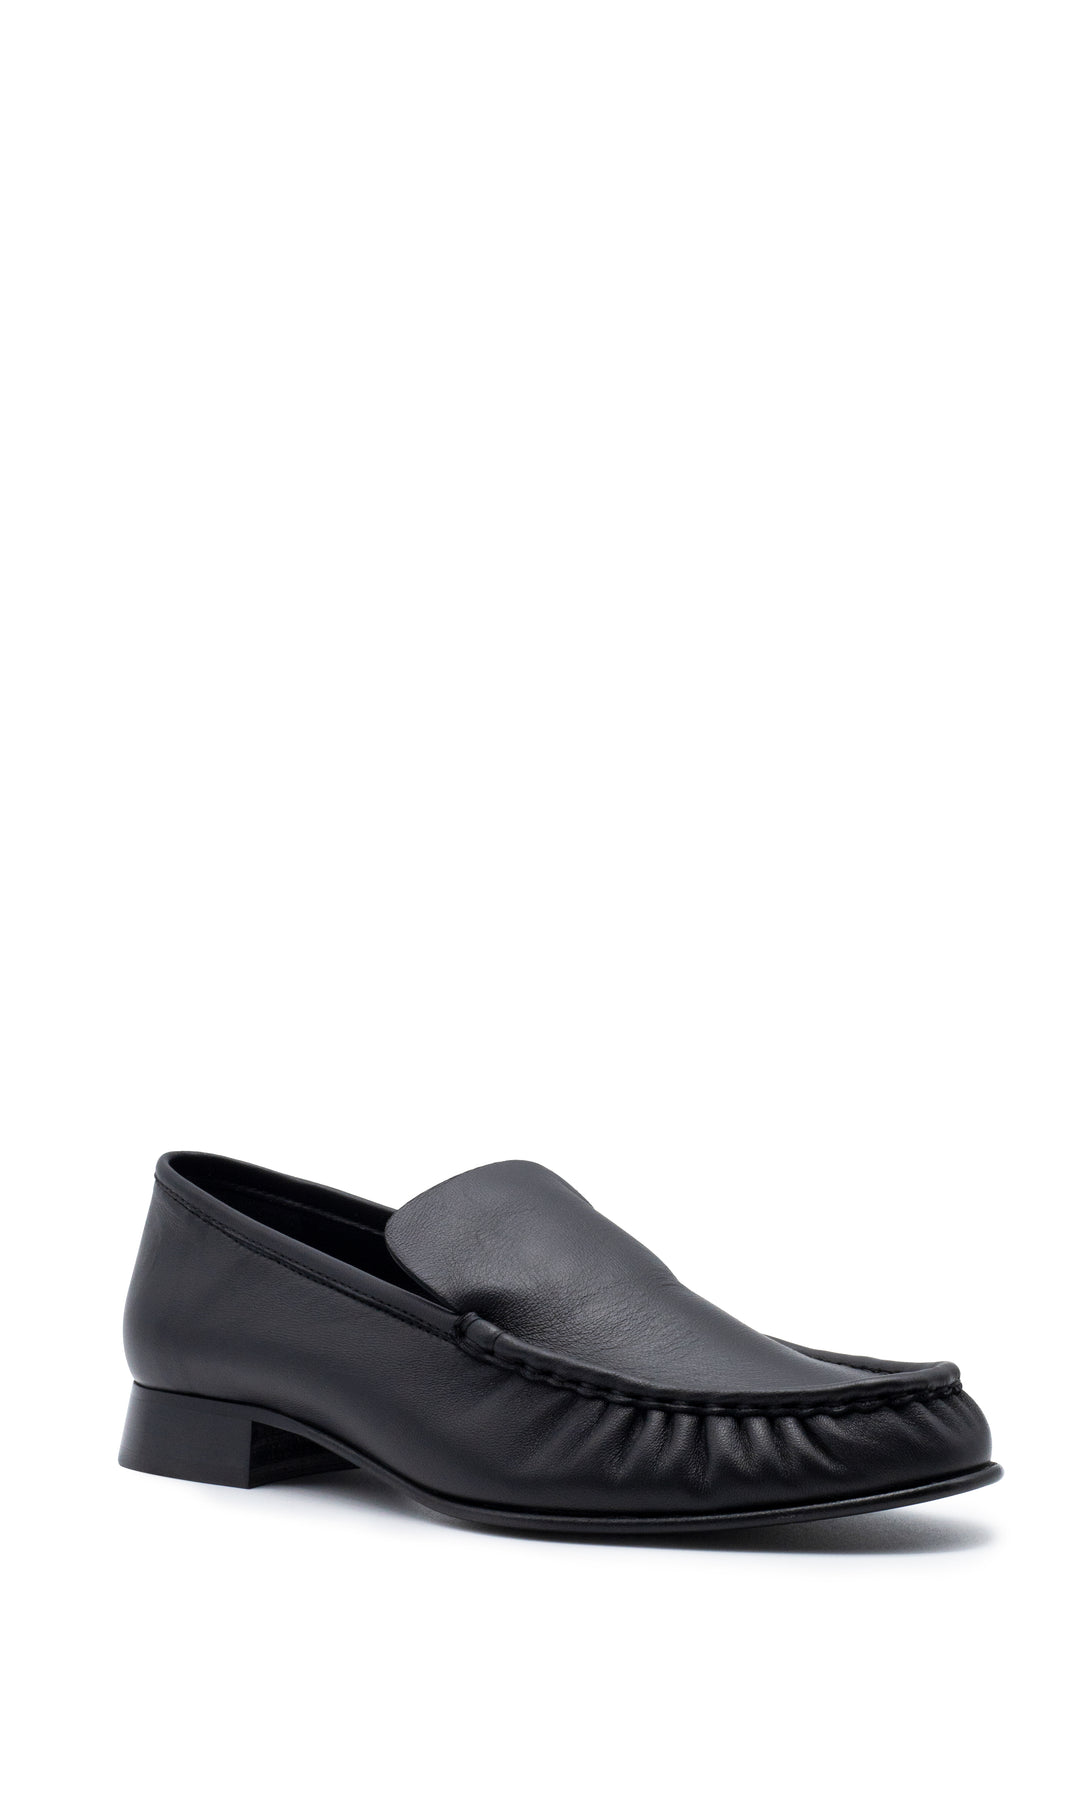 GIABORGHINI x The Garment Bodil Loafers in Nappa Black